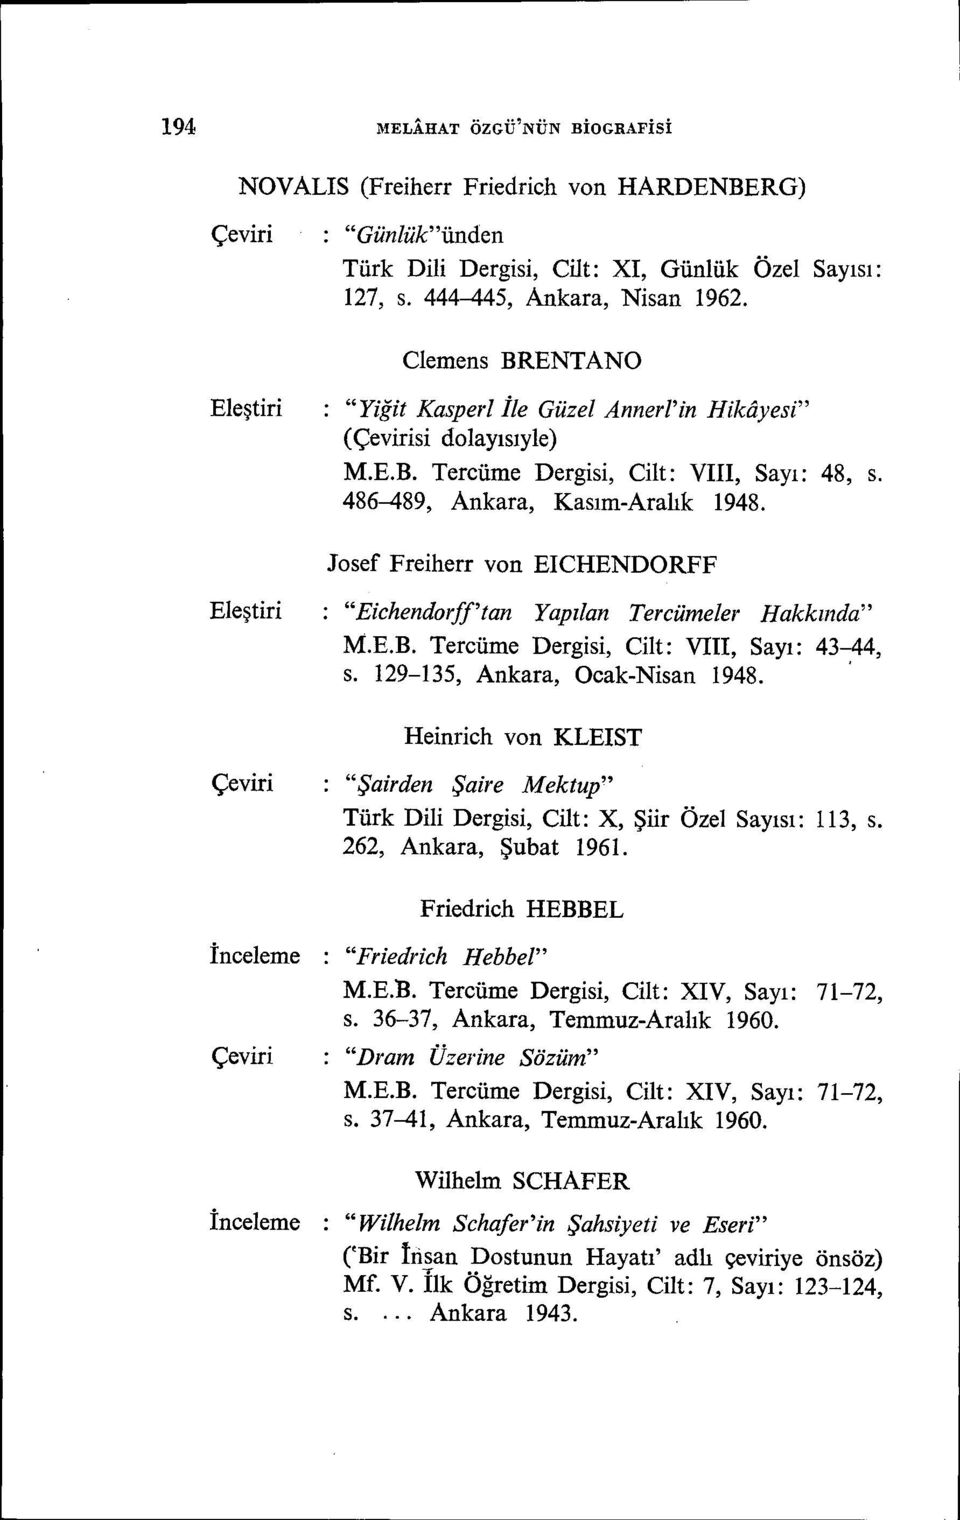 Josef Freiherr von EICHENDORFF Eleştiri Eichendorff'tan Yapılan Tercümeler Hakkında M.E.B. Tercüme Dergisi, Cilt: VIII, Sayı: 43~4, s. 129-135, Ankara, Ocak-Nisan 1948.